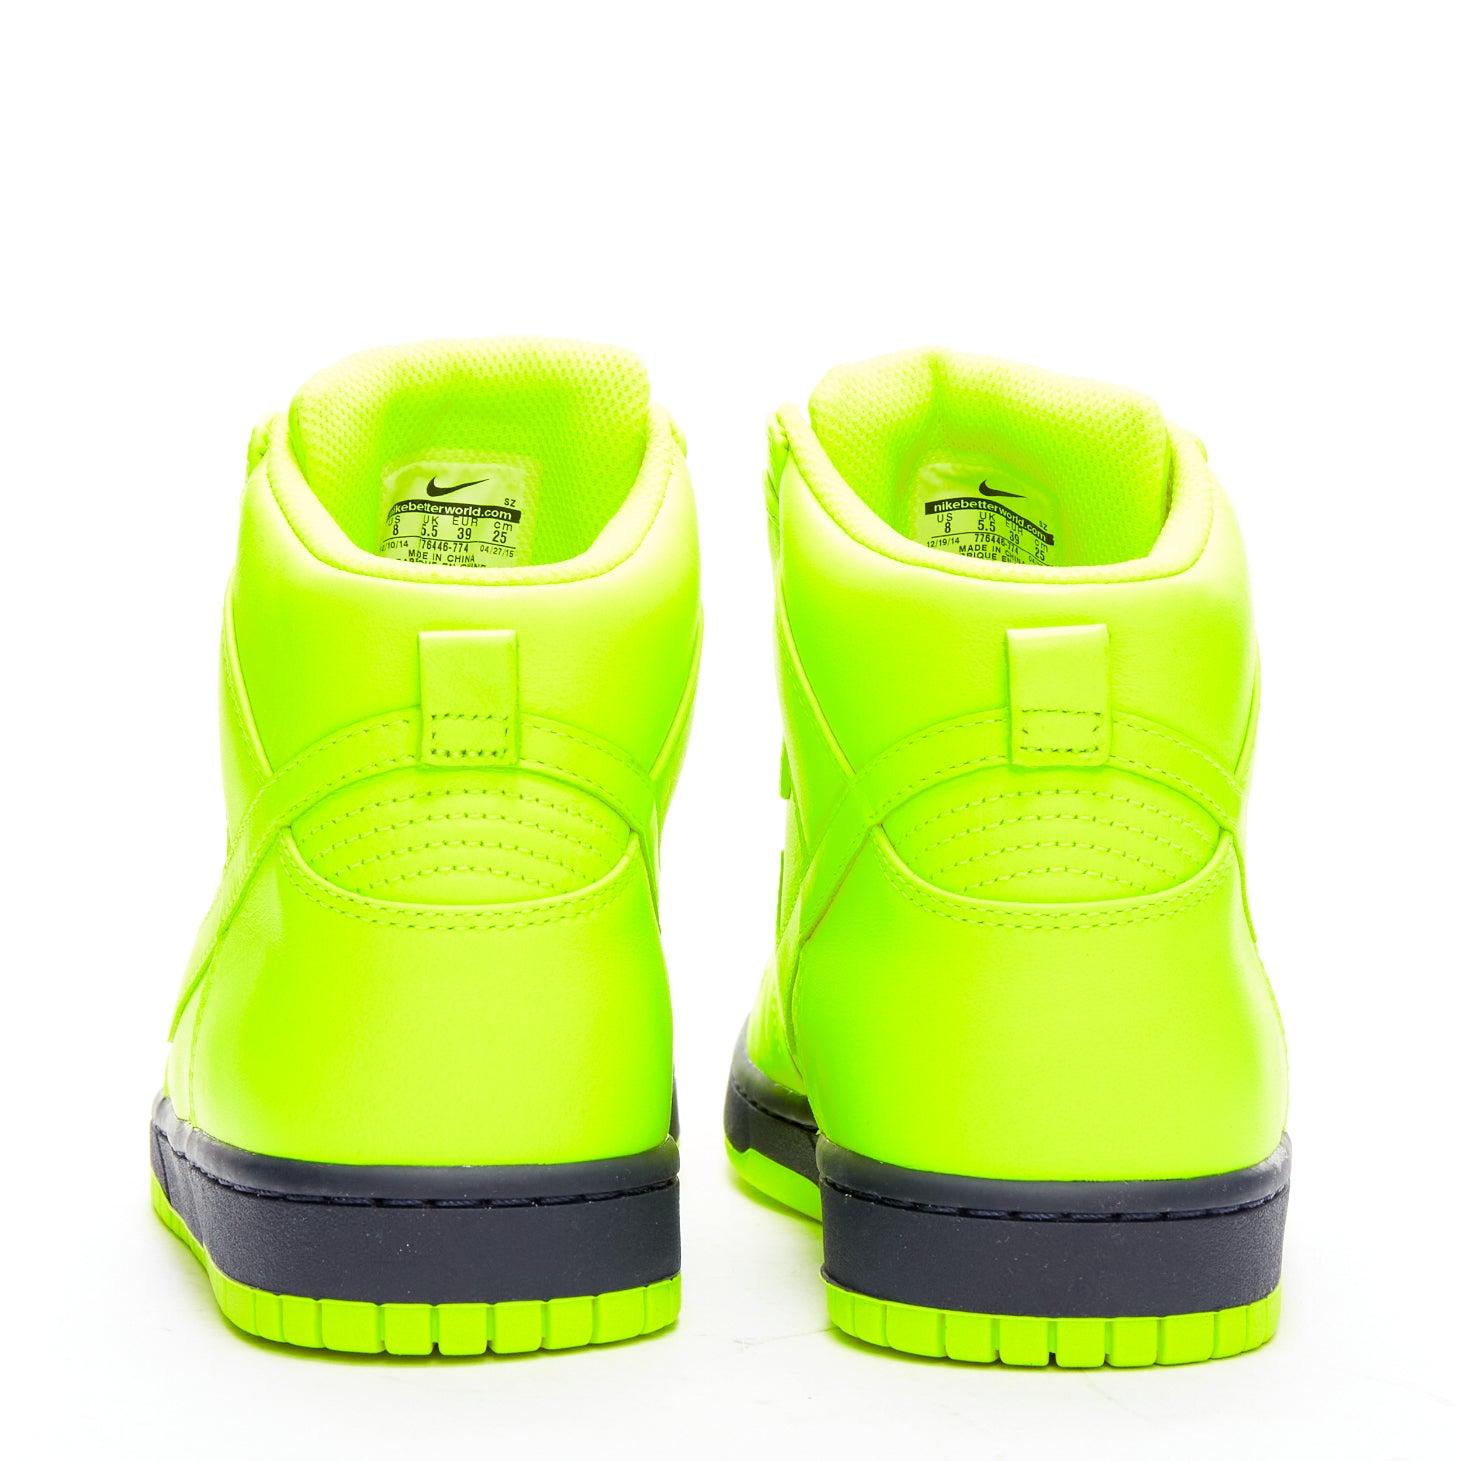 SACAI NIKE NIKELAB Dunk Lux SP Volt neon yellow high top sneakers US8 EU38 1